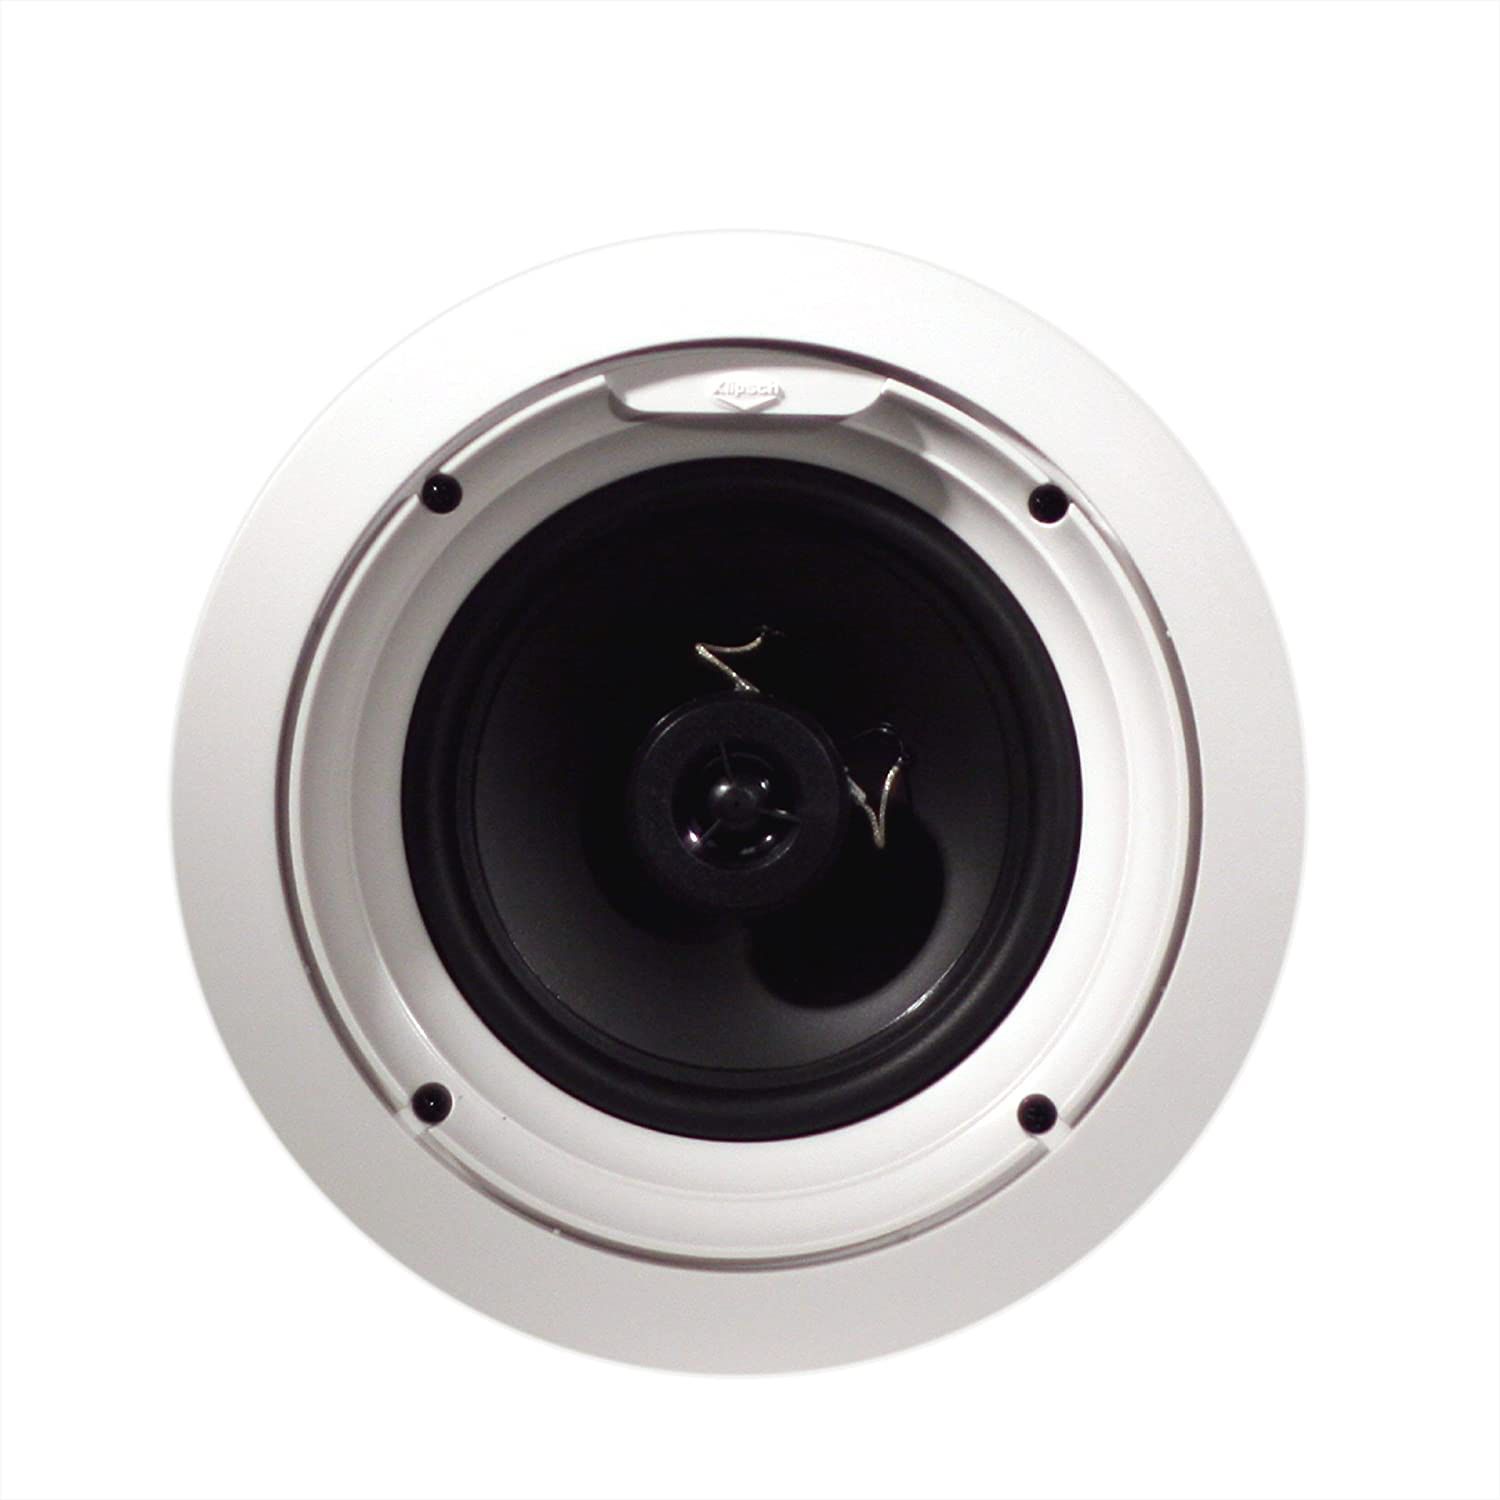 KLIPSCH R-1650 - C In-Ceiling Speaker - White. Set of Two. NIB